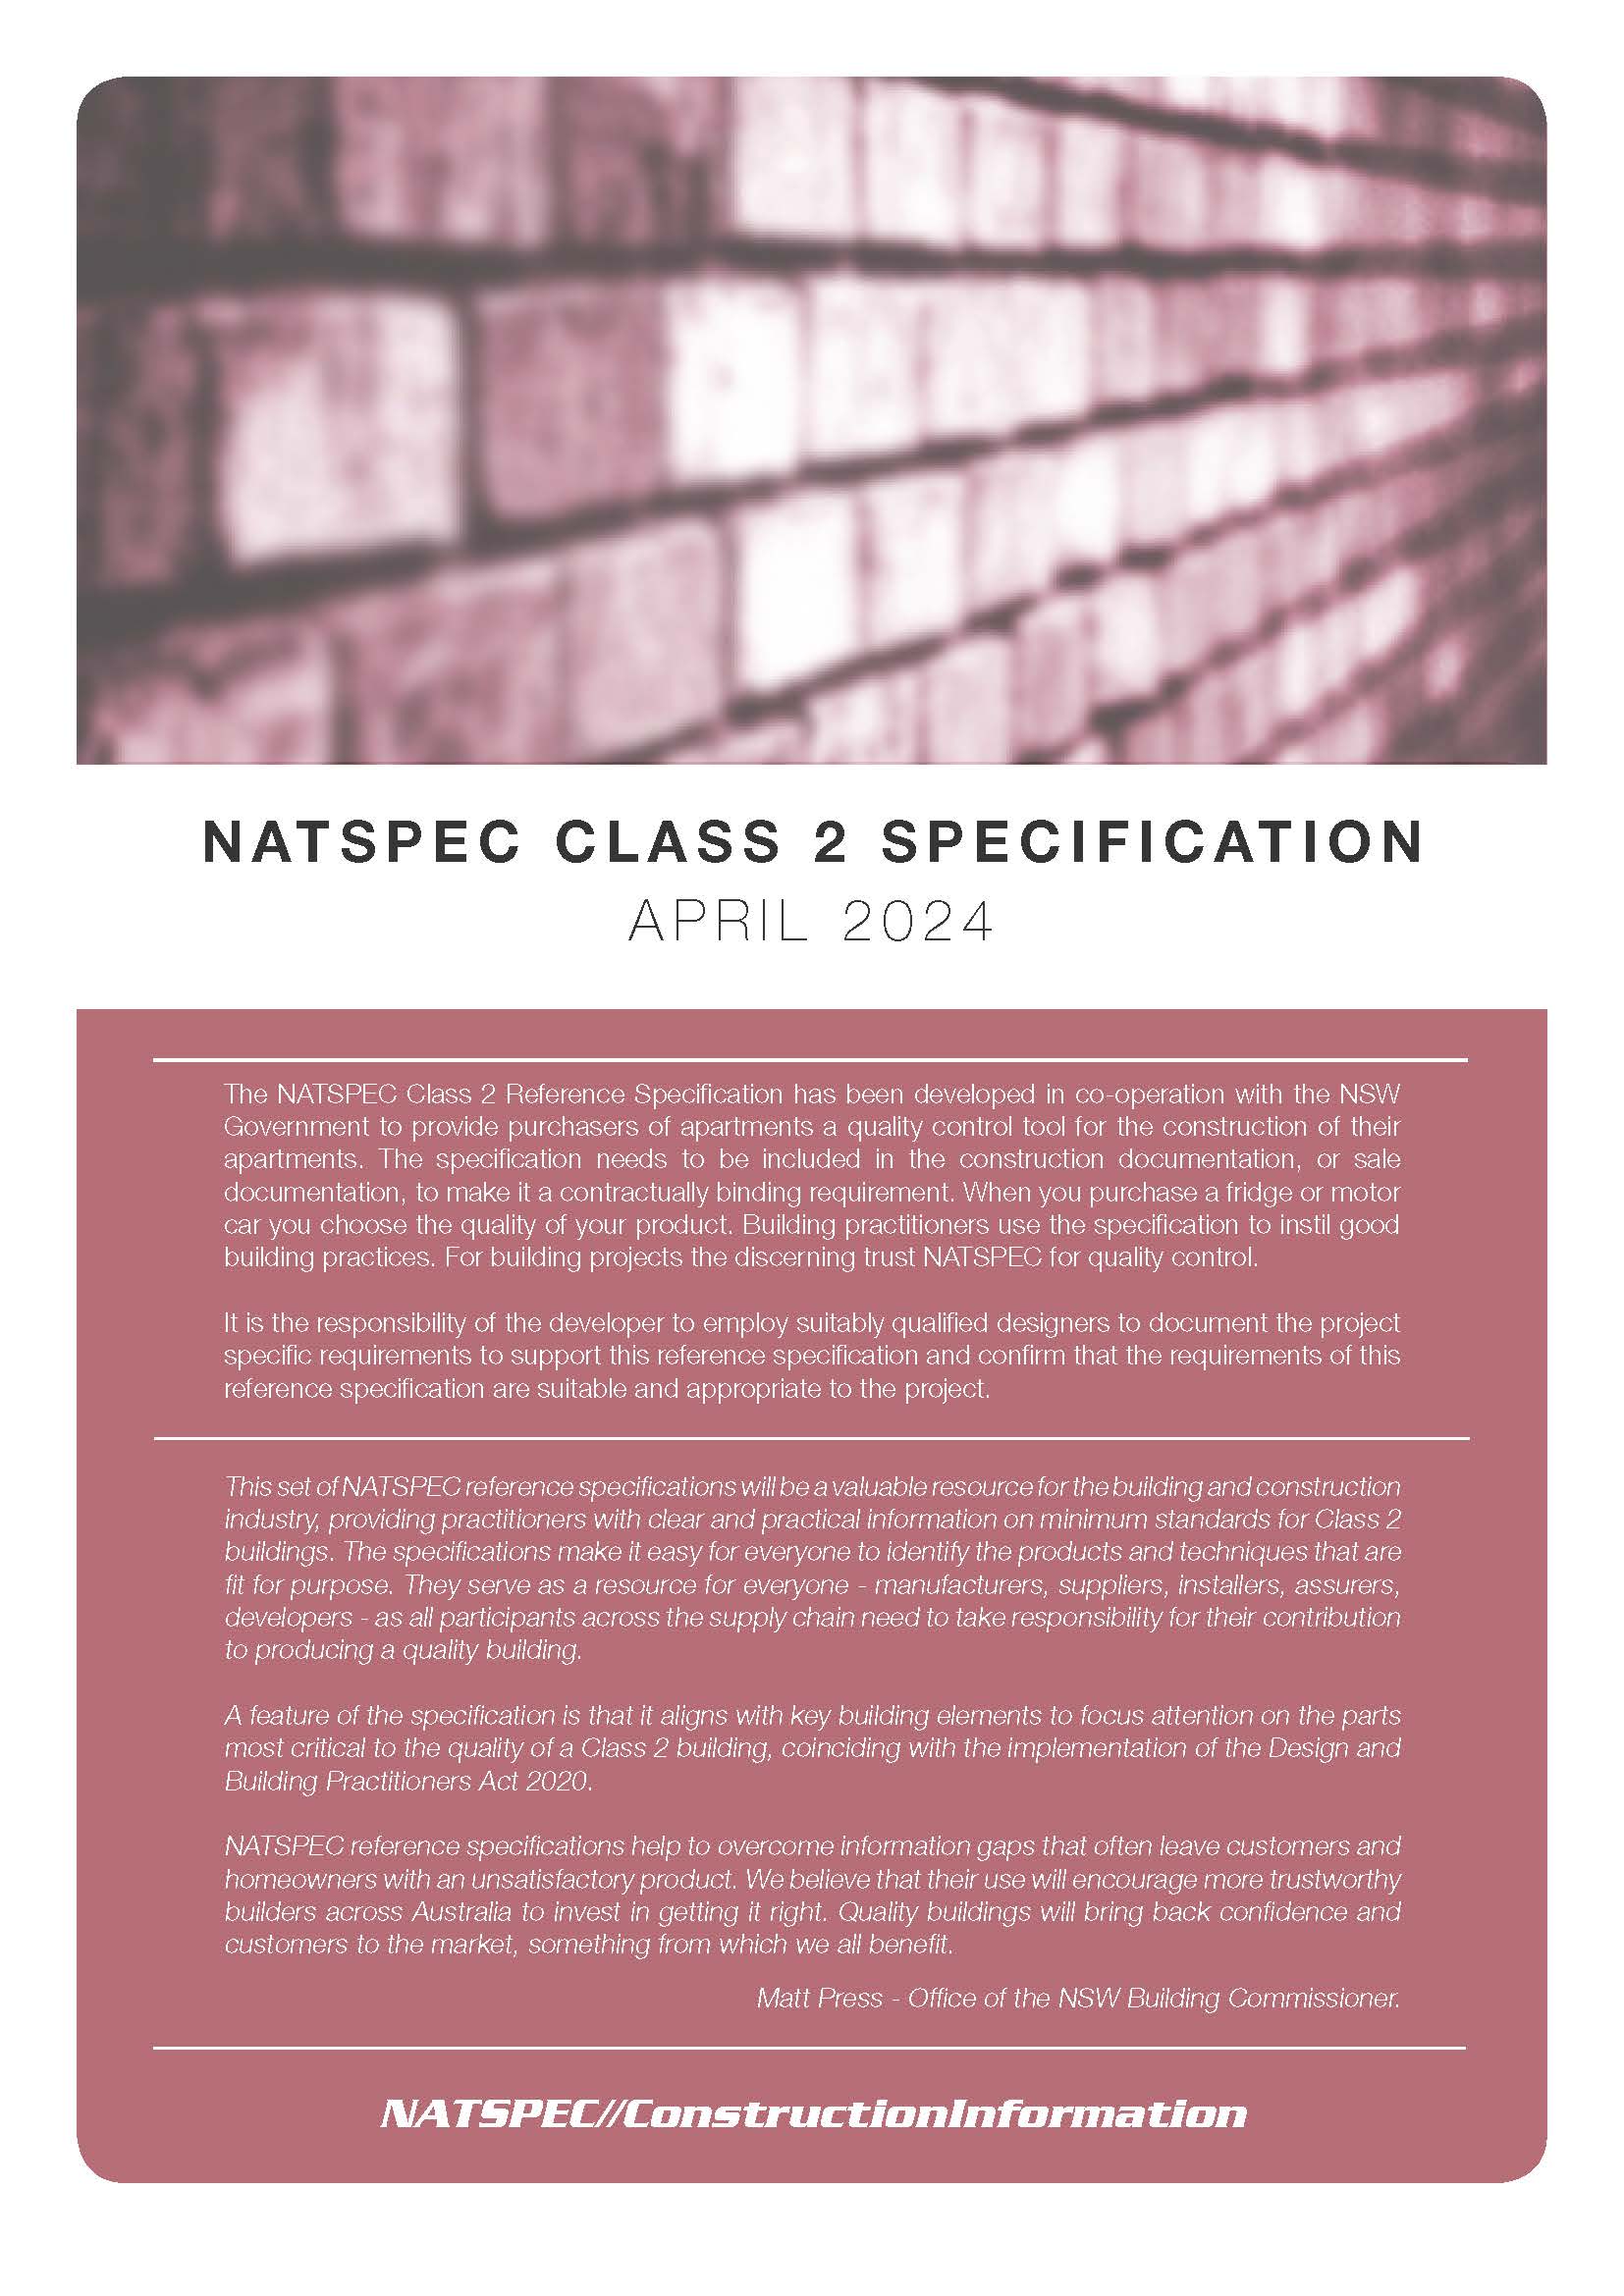 NATSPEC Class 2 Specification